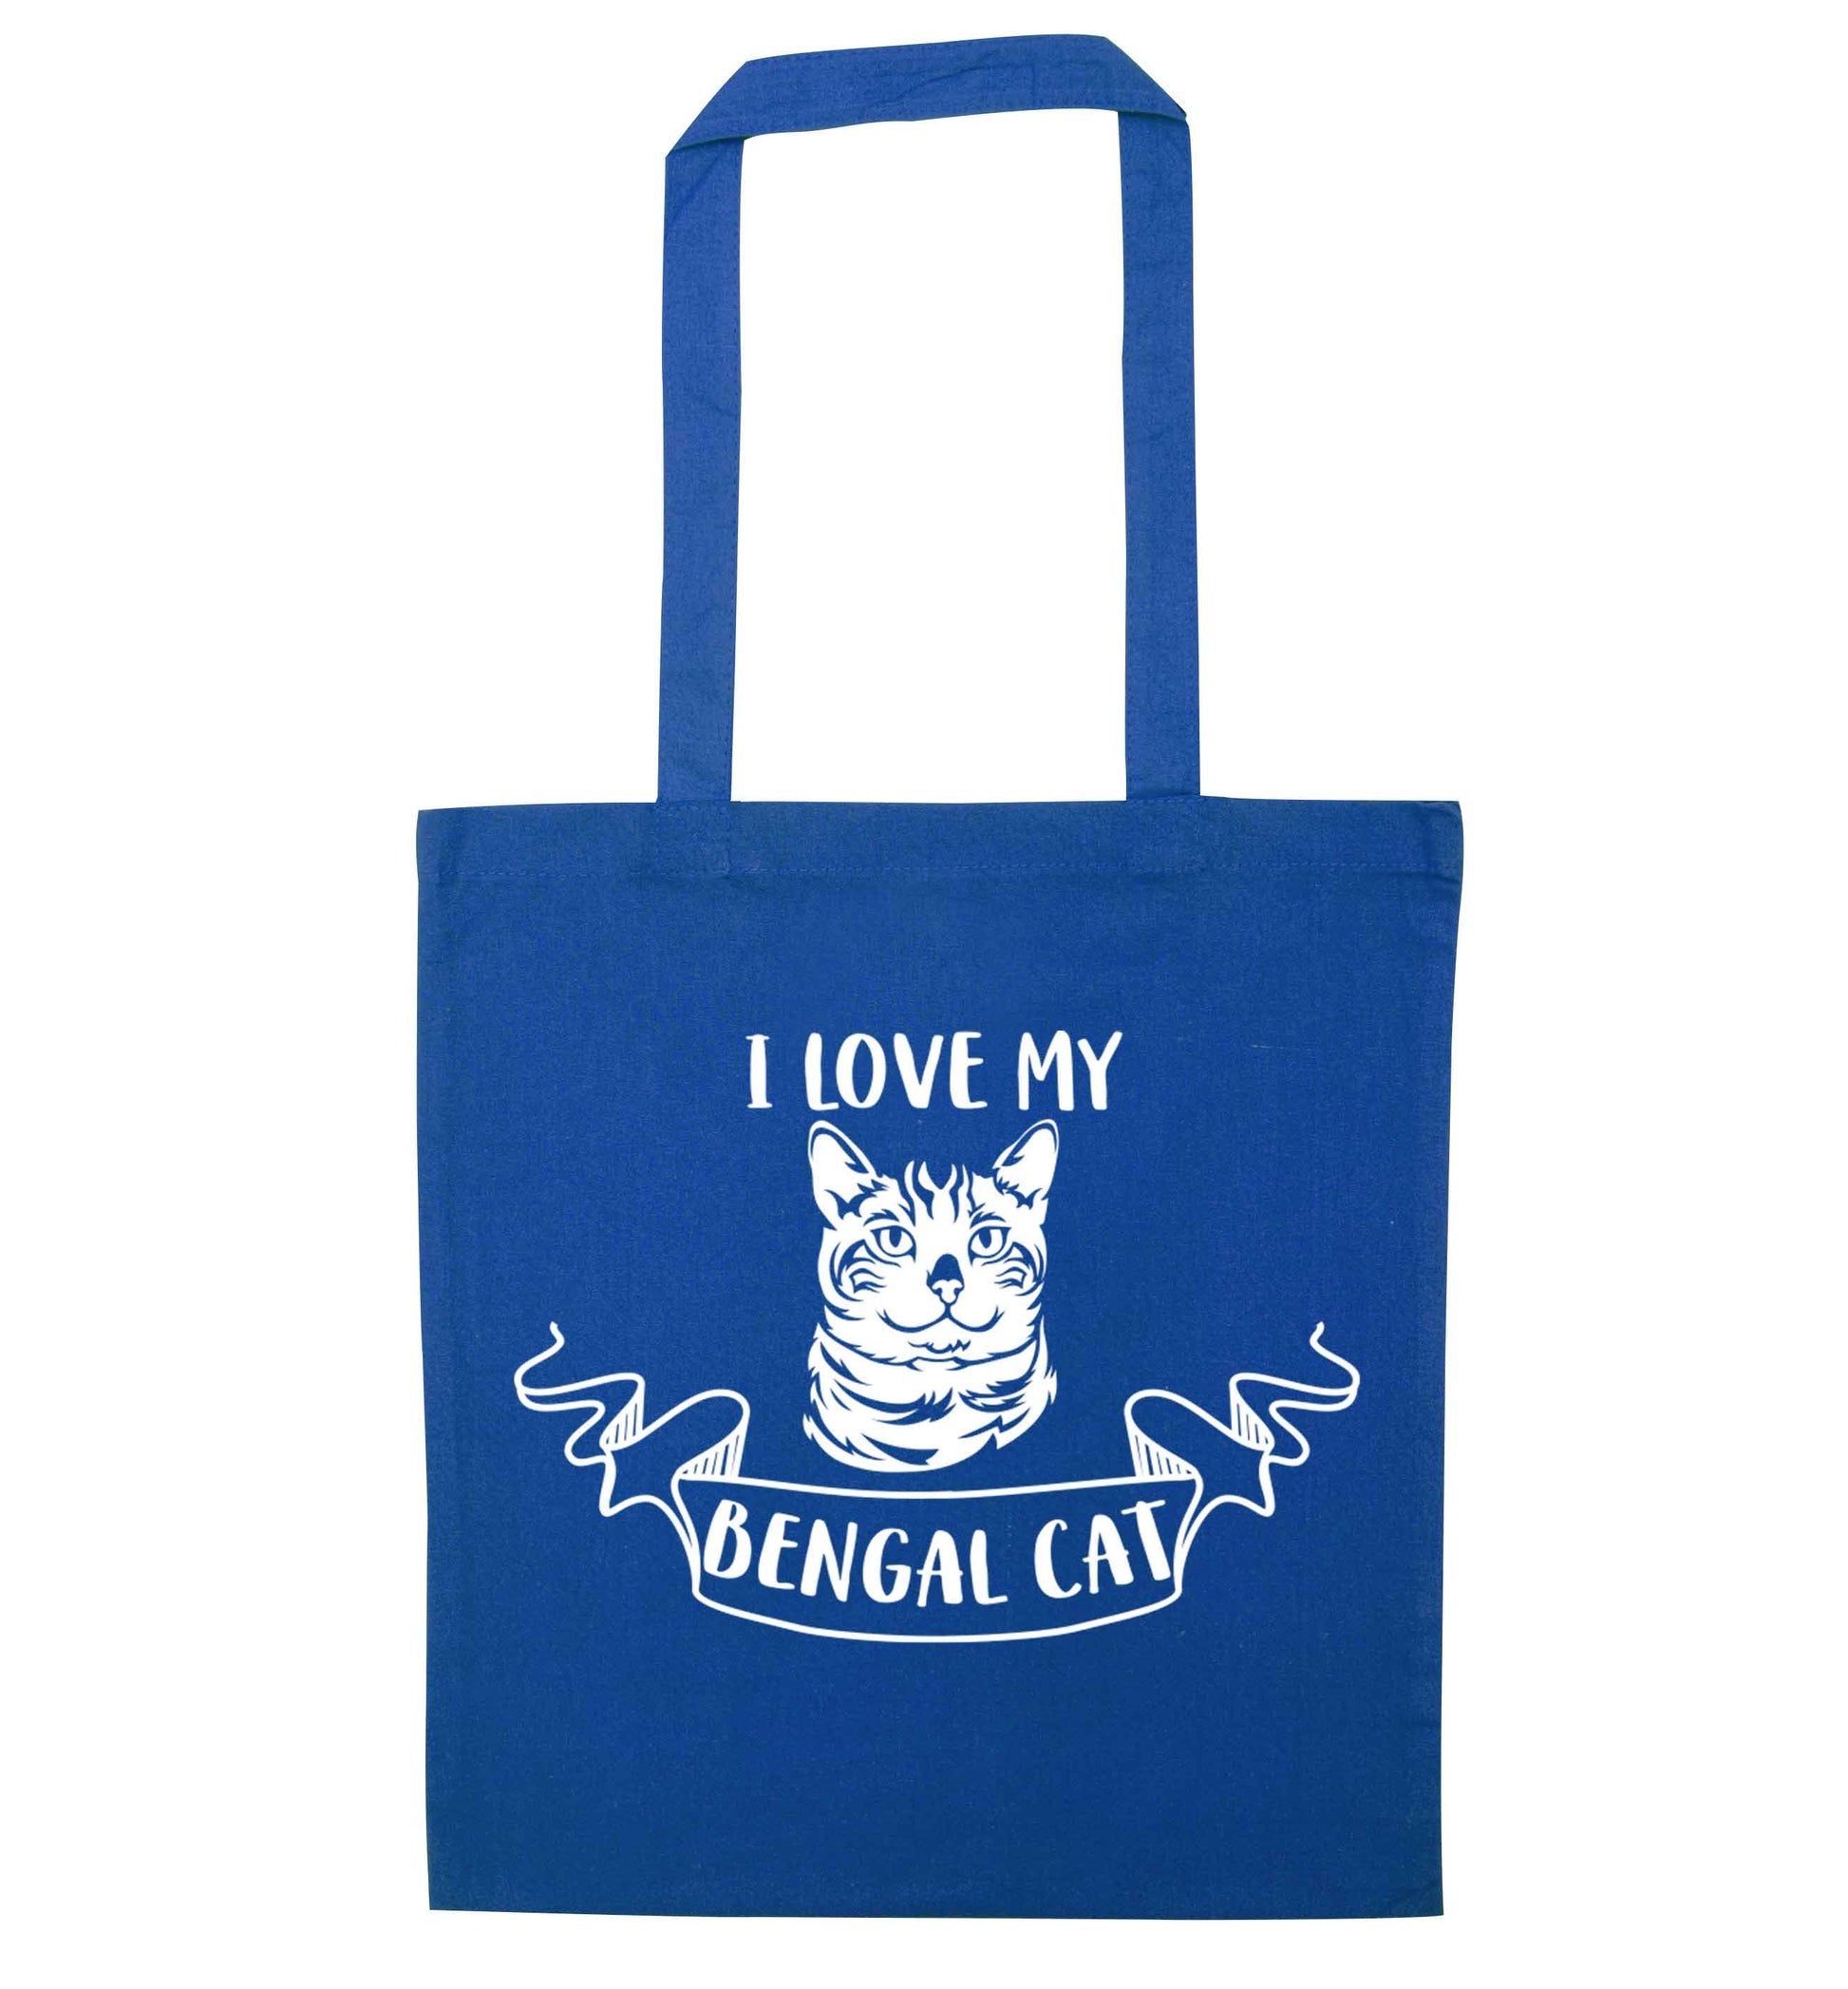 I love my begnal cat blue tote bag